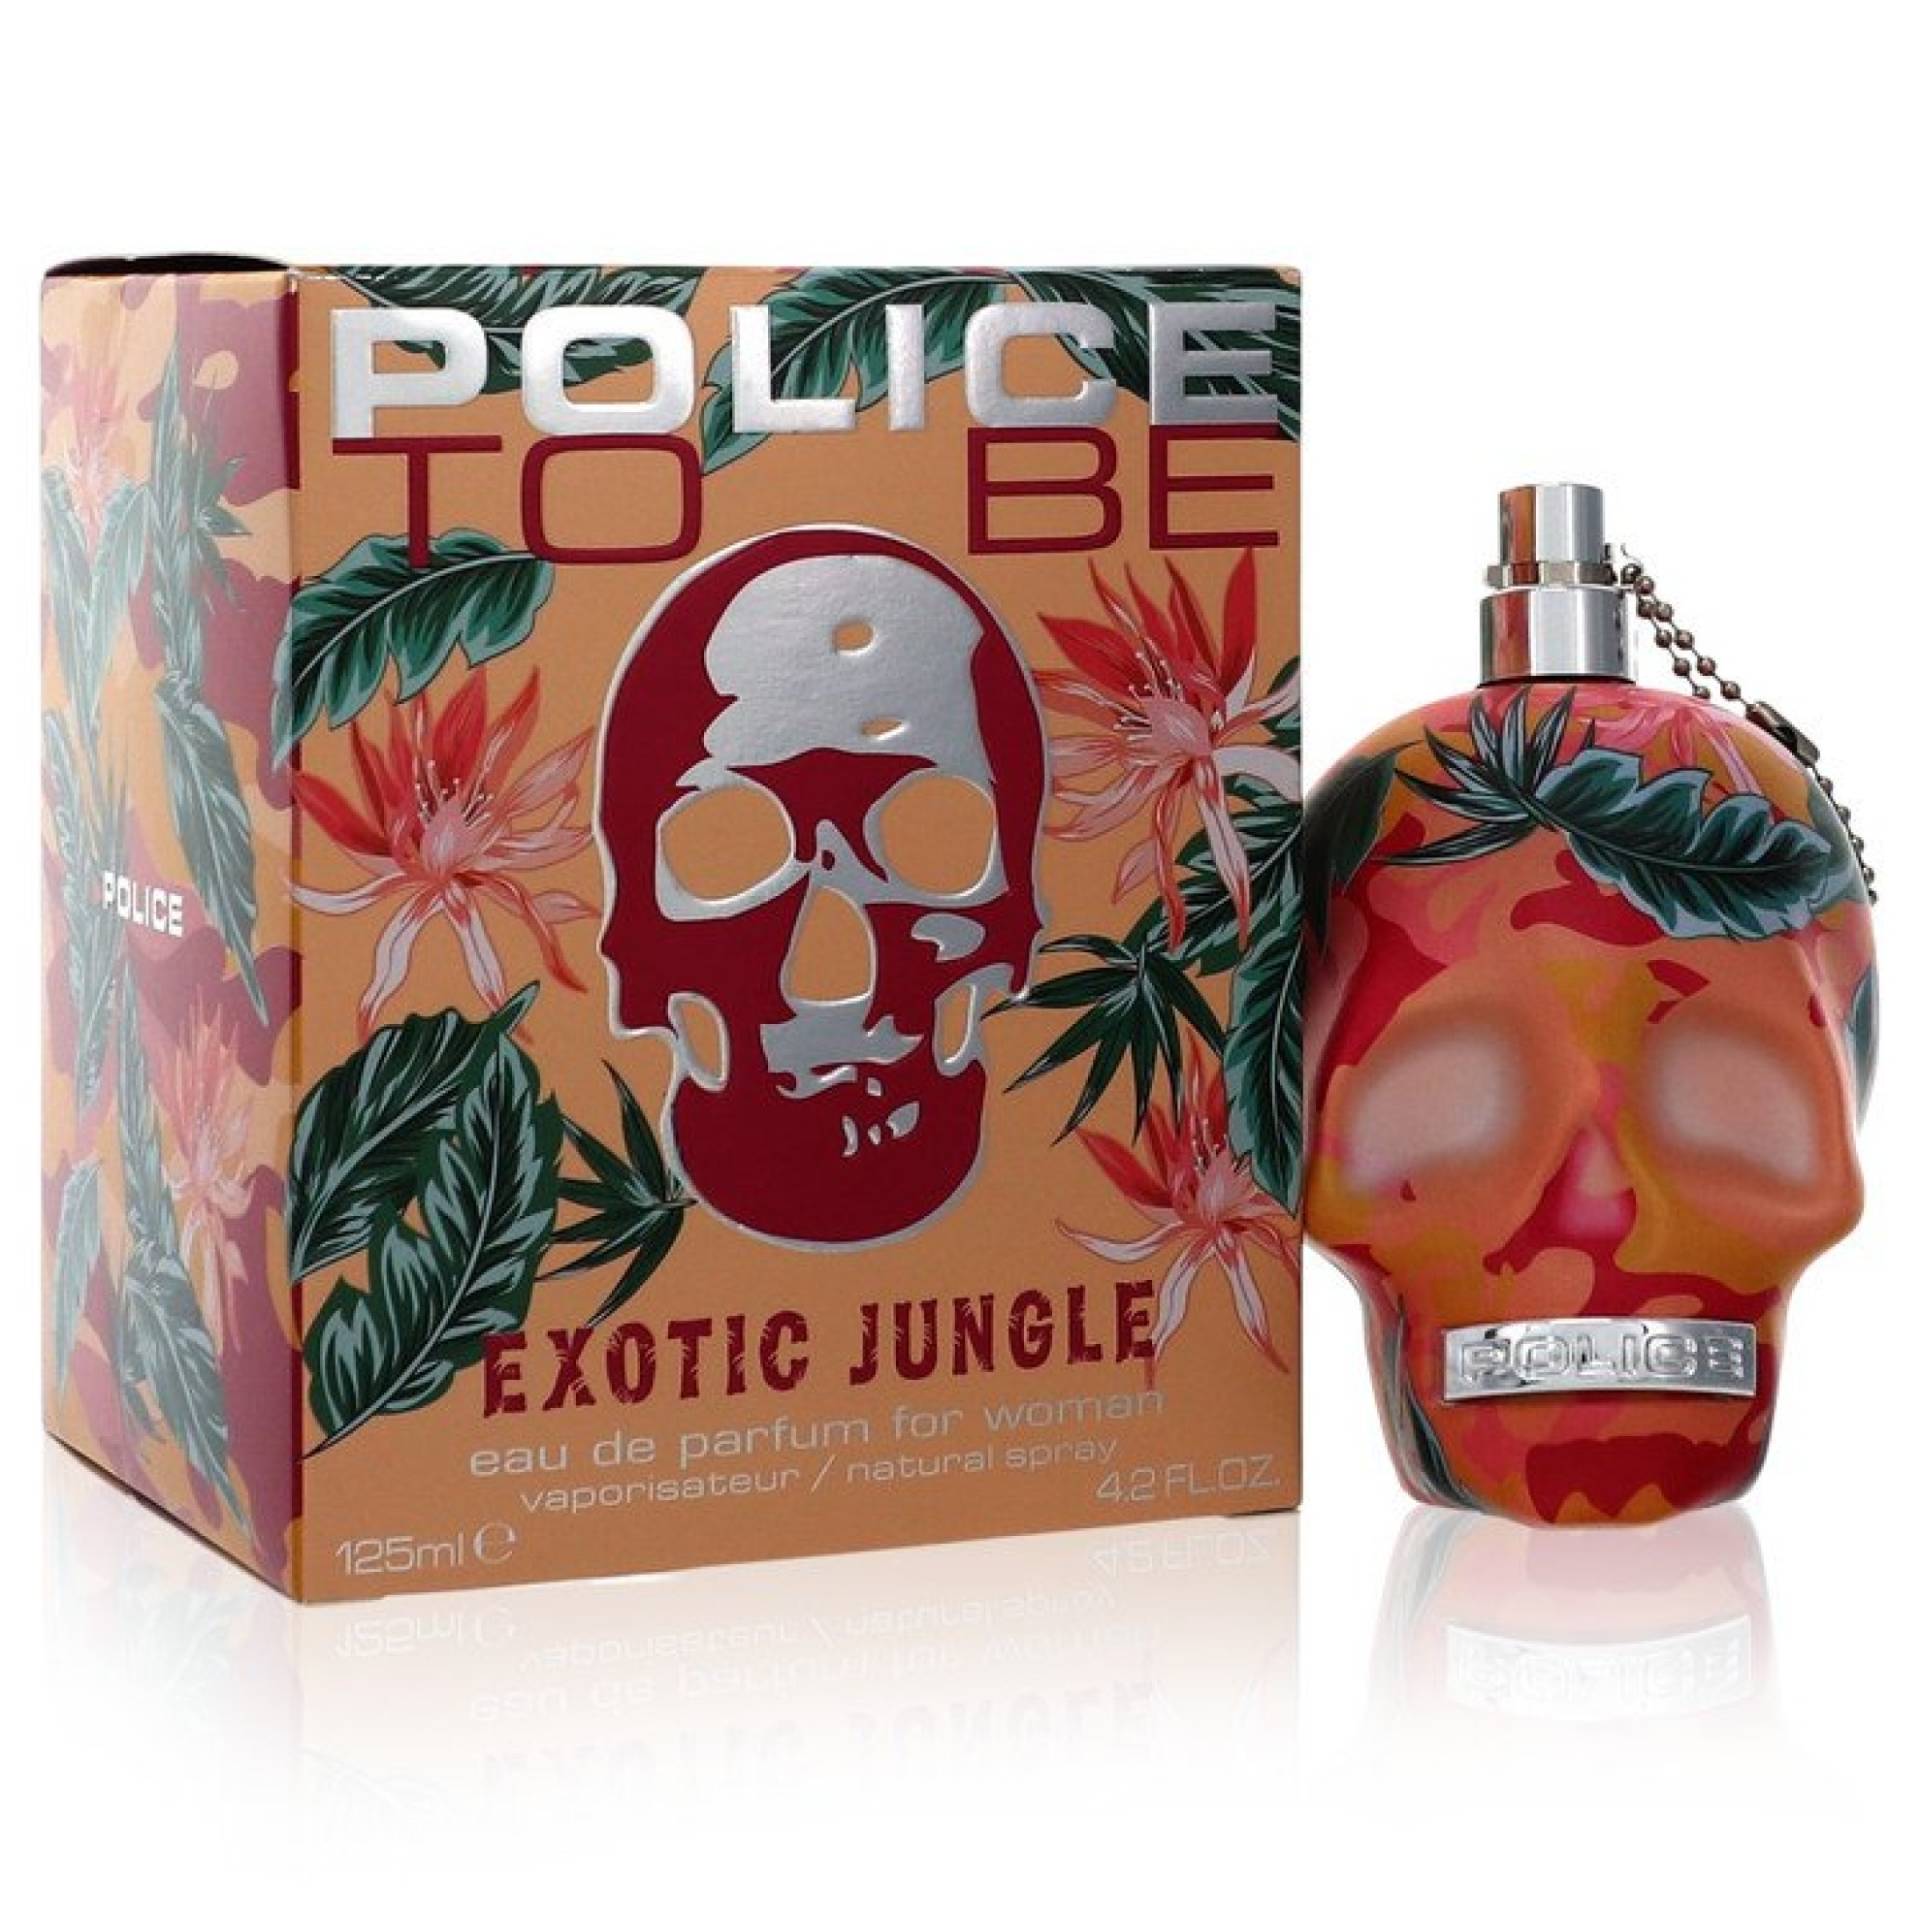 Police Colognes Police To Be Exotic Jungle Eau De Parfum Spray 124 ml von Police Colognes